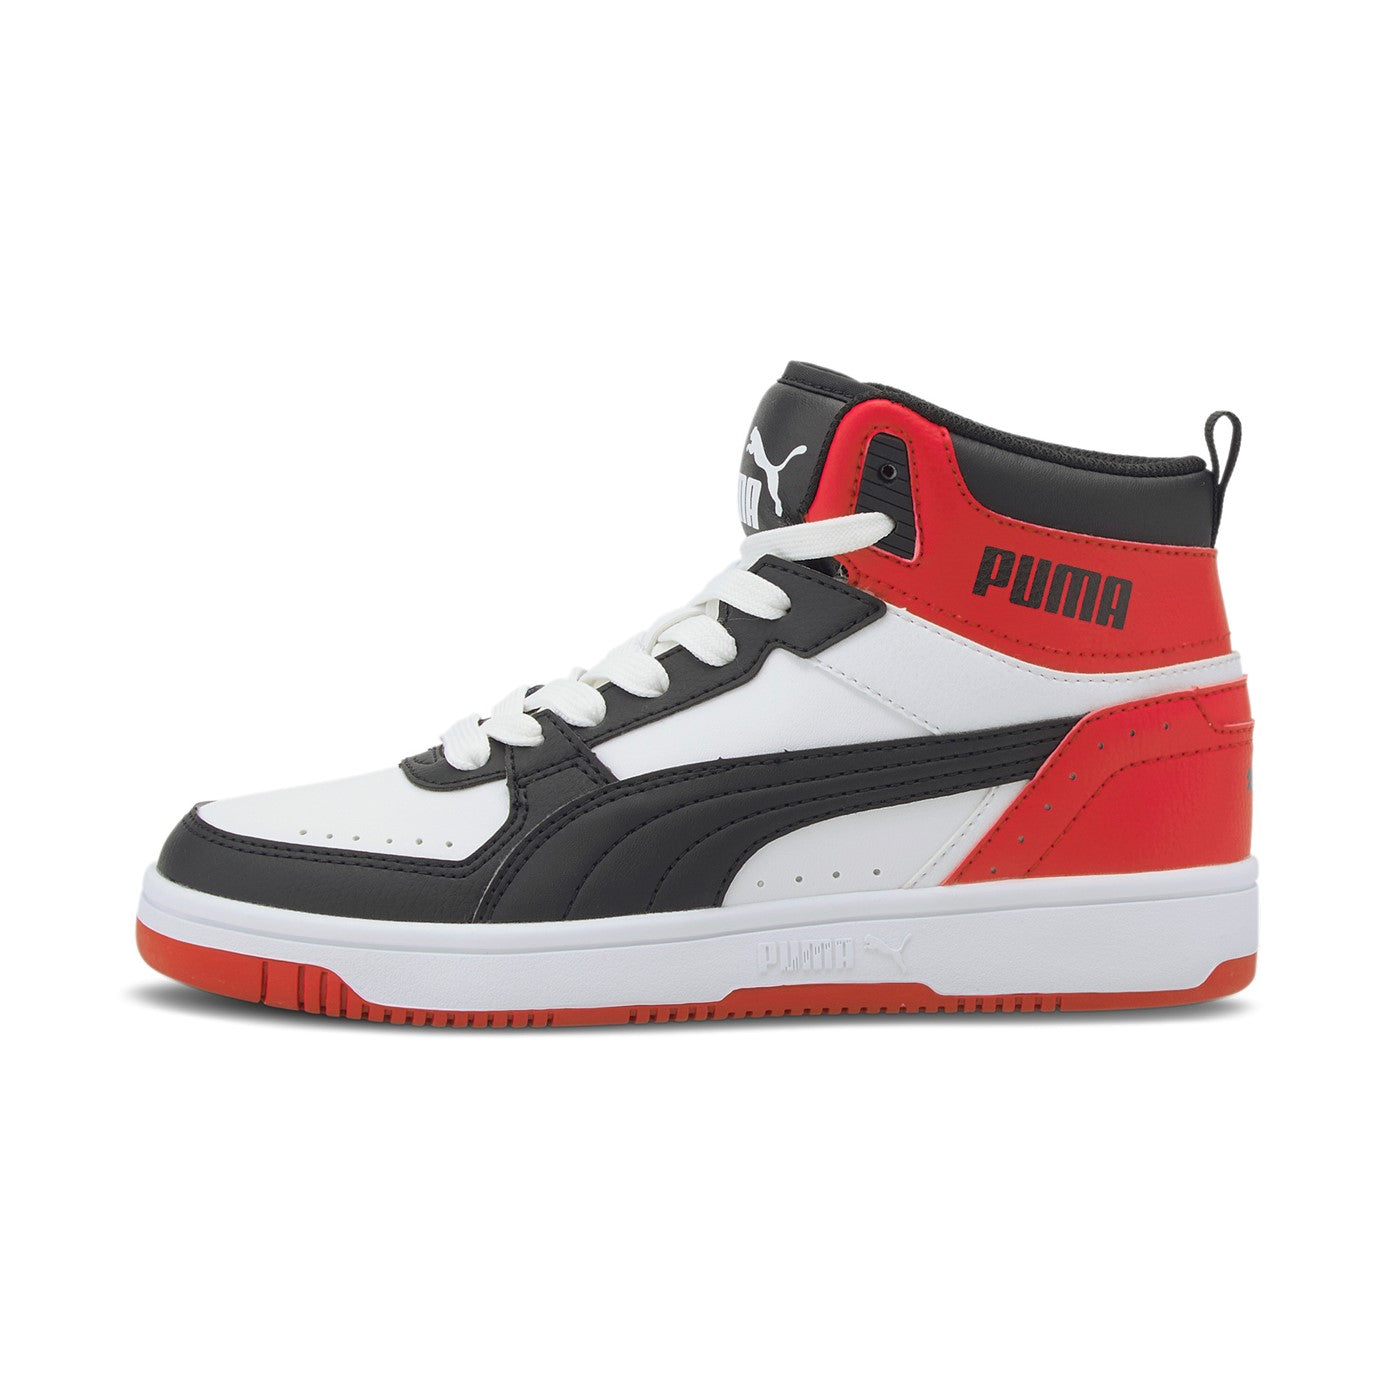 Puma Sneakers alta da ragazzo Rebound JOY Jr 374687 03 White-Black-High Risk Red